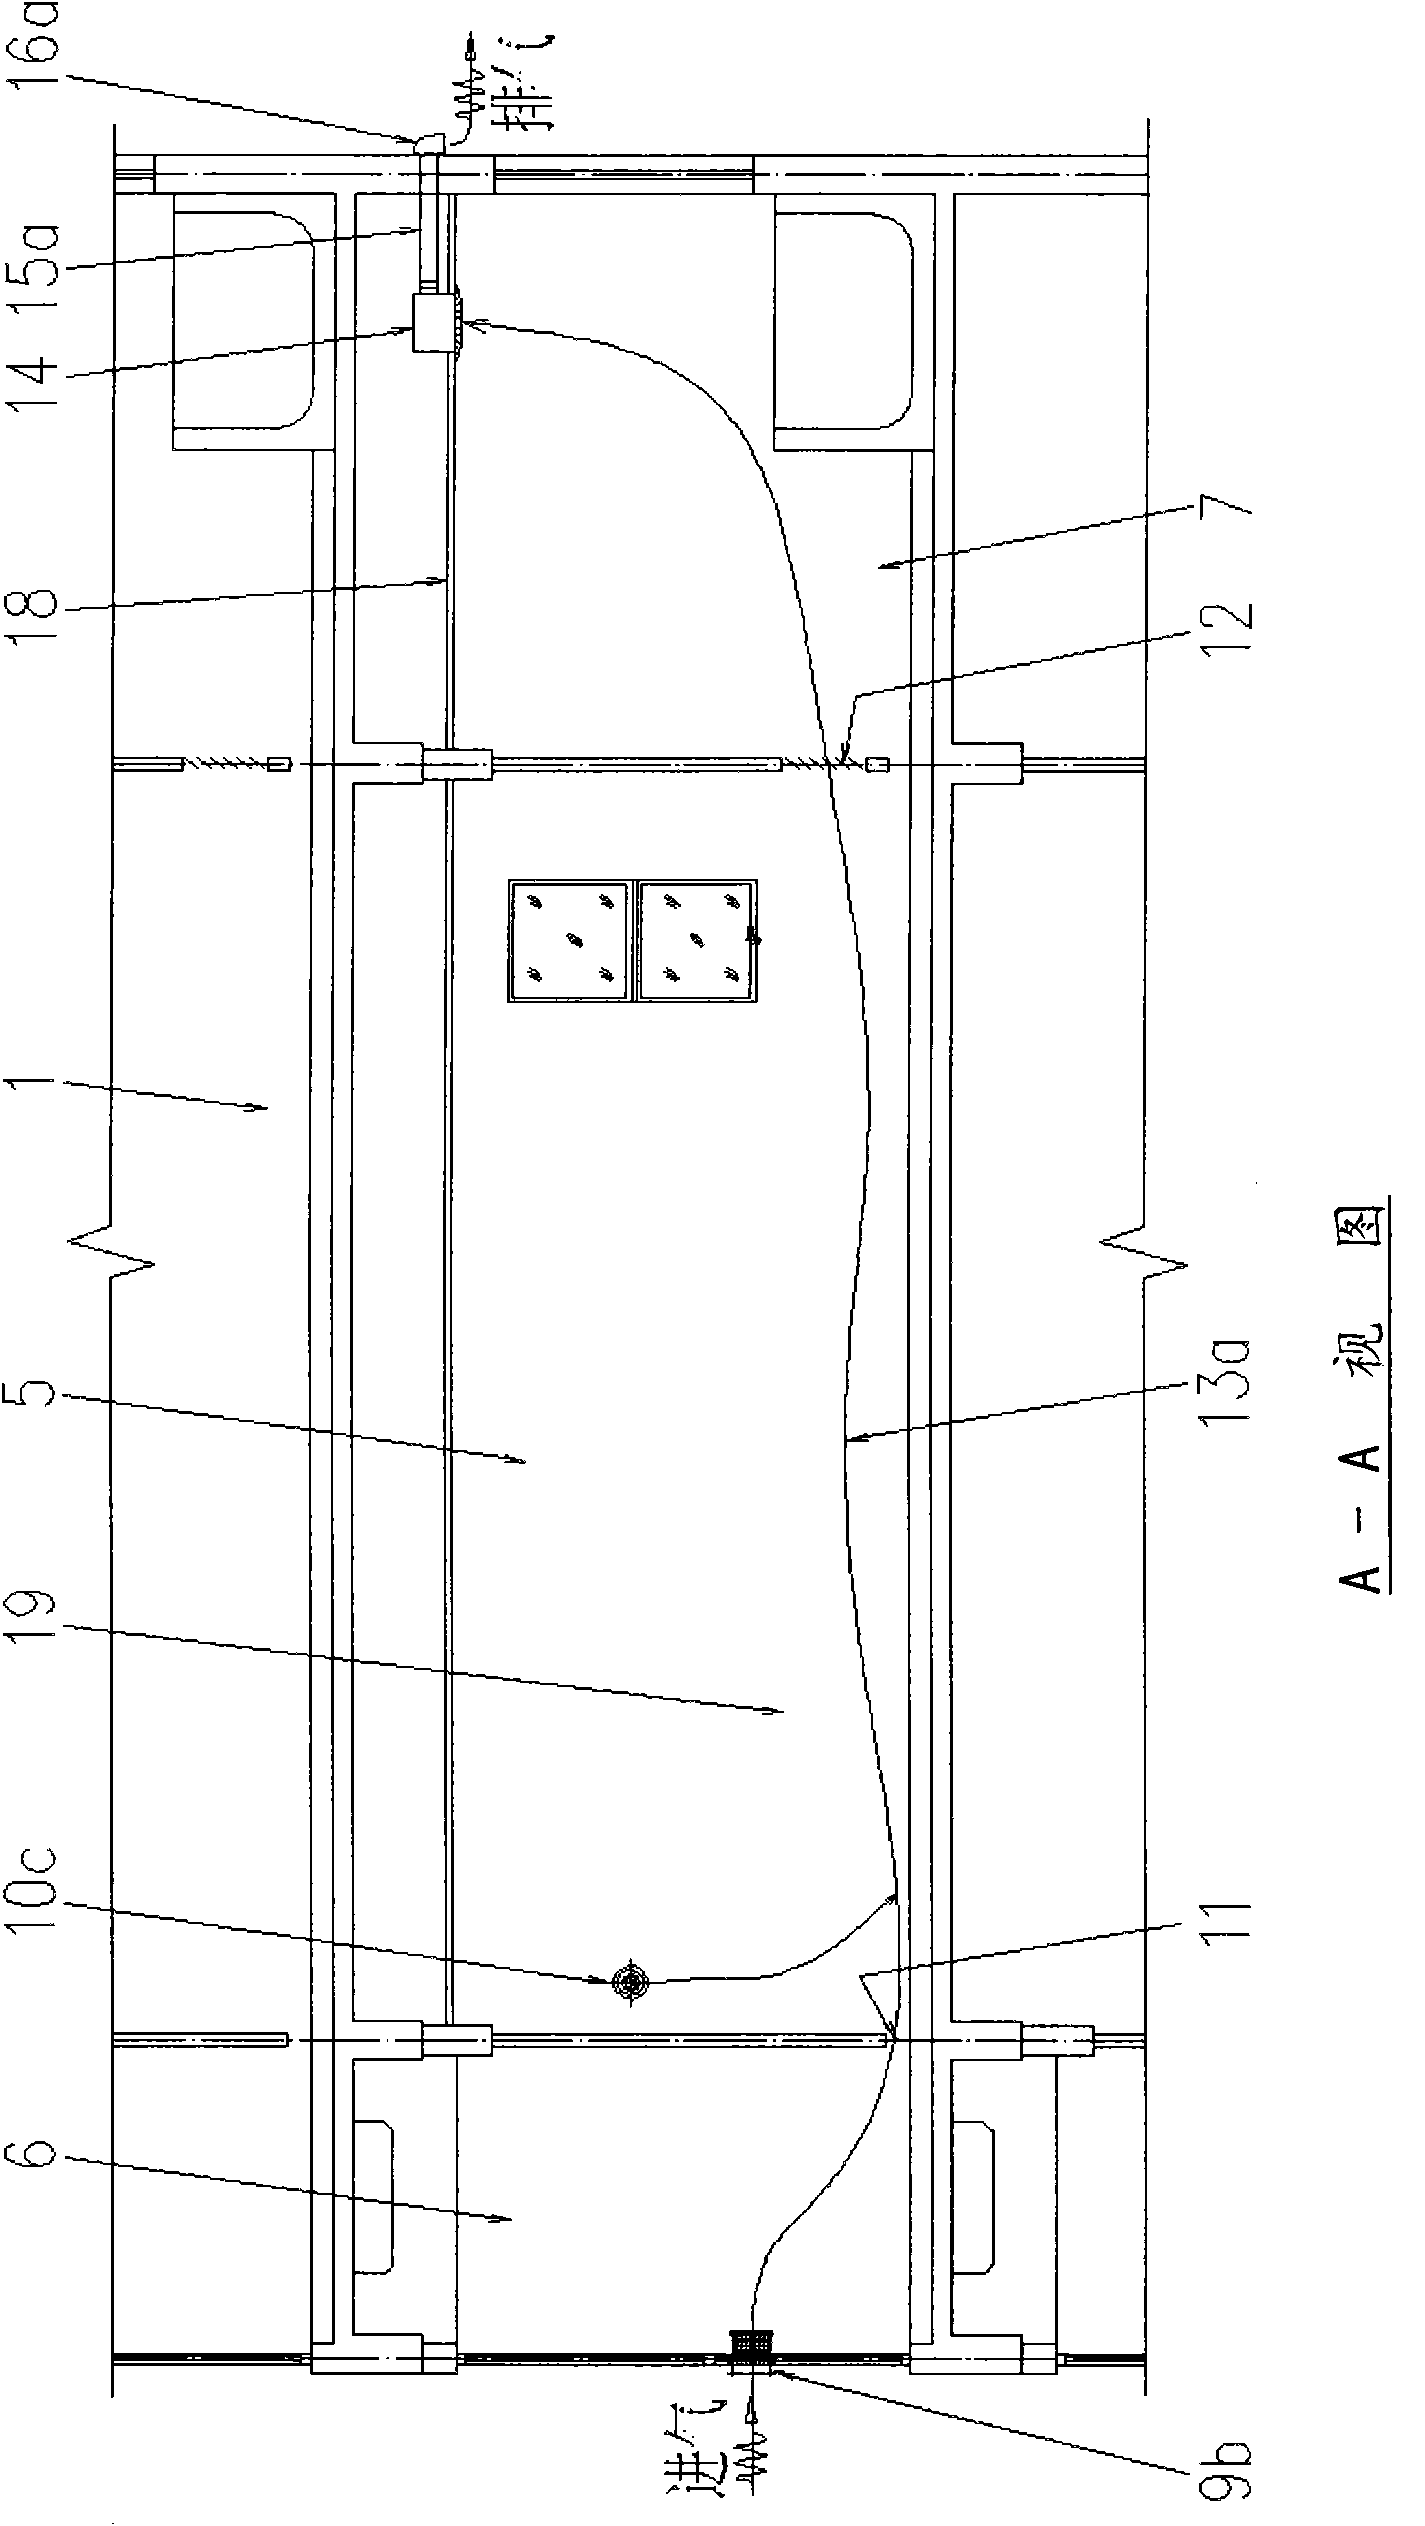 Ventilation system for civil buildings